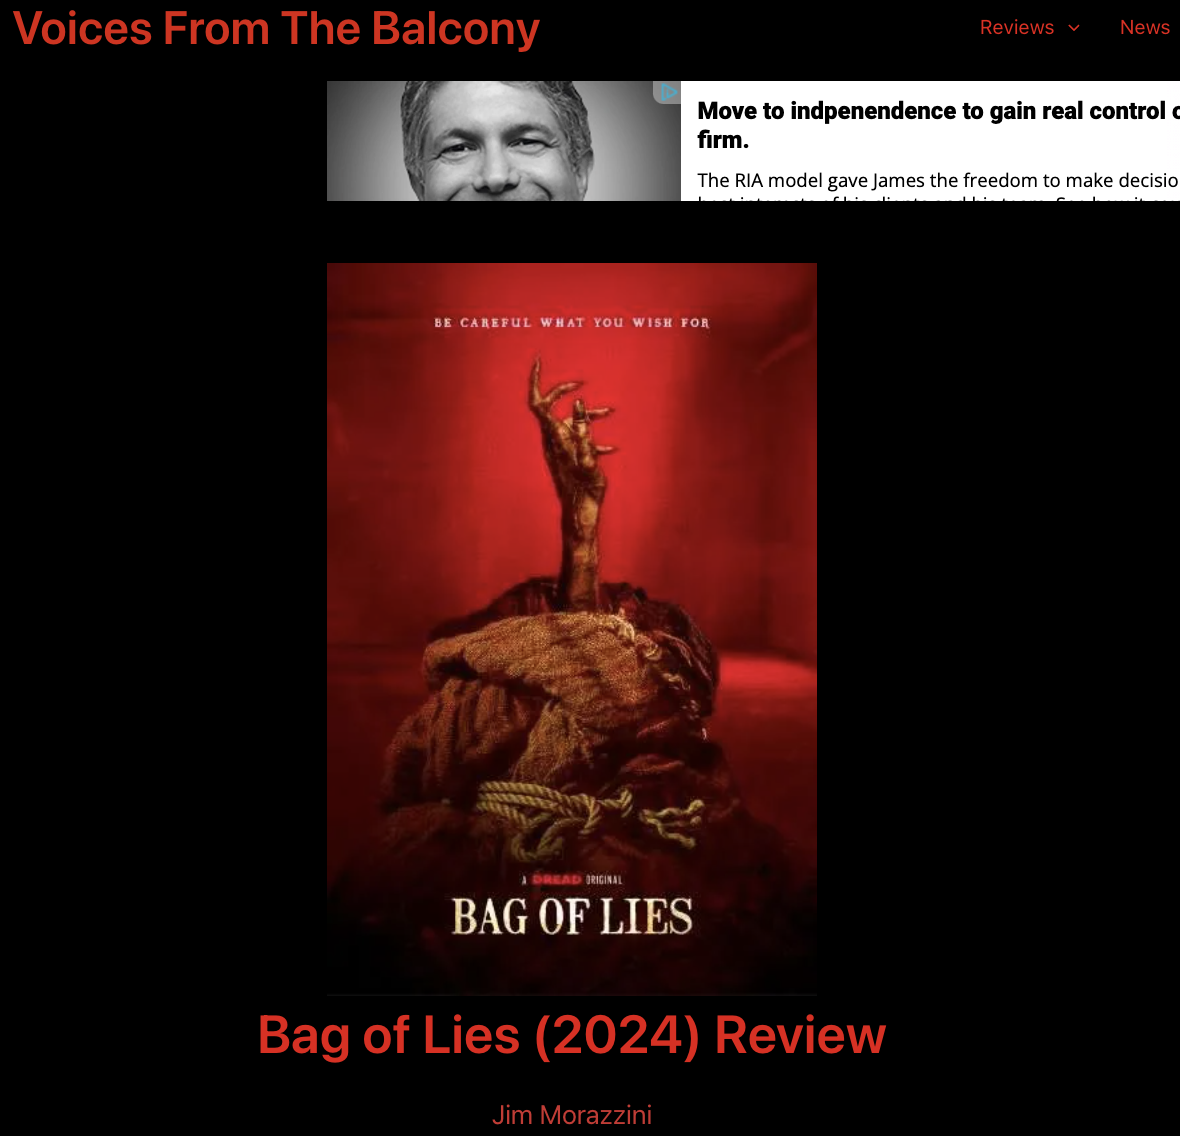 Bag of Lies (2024) Review